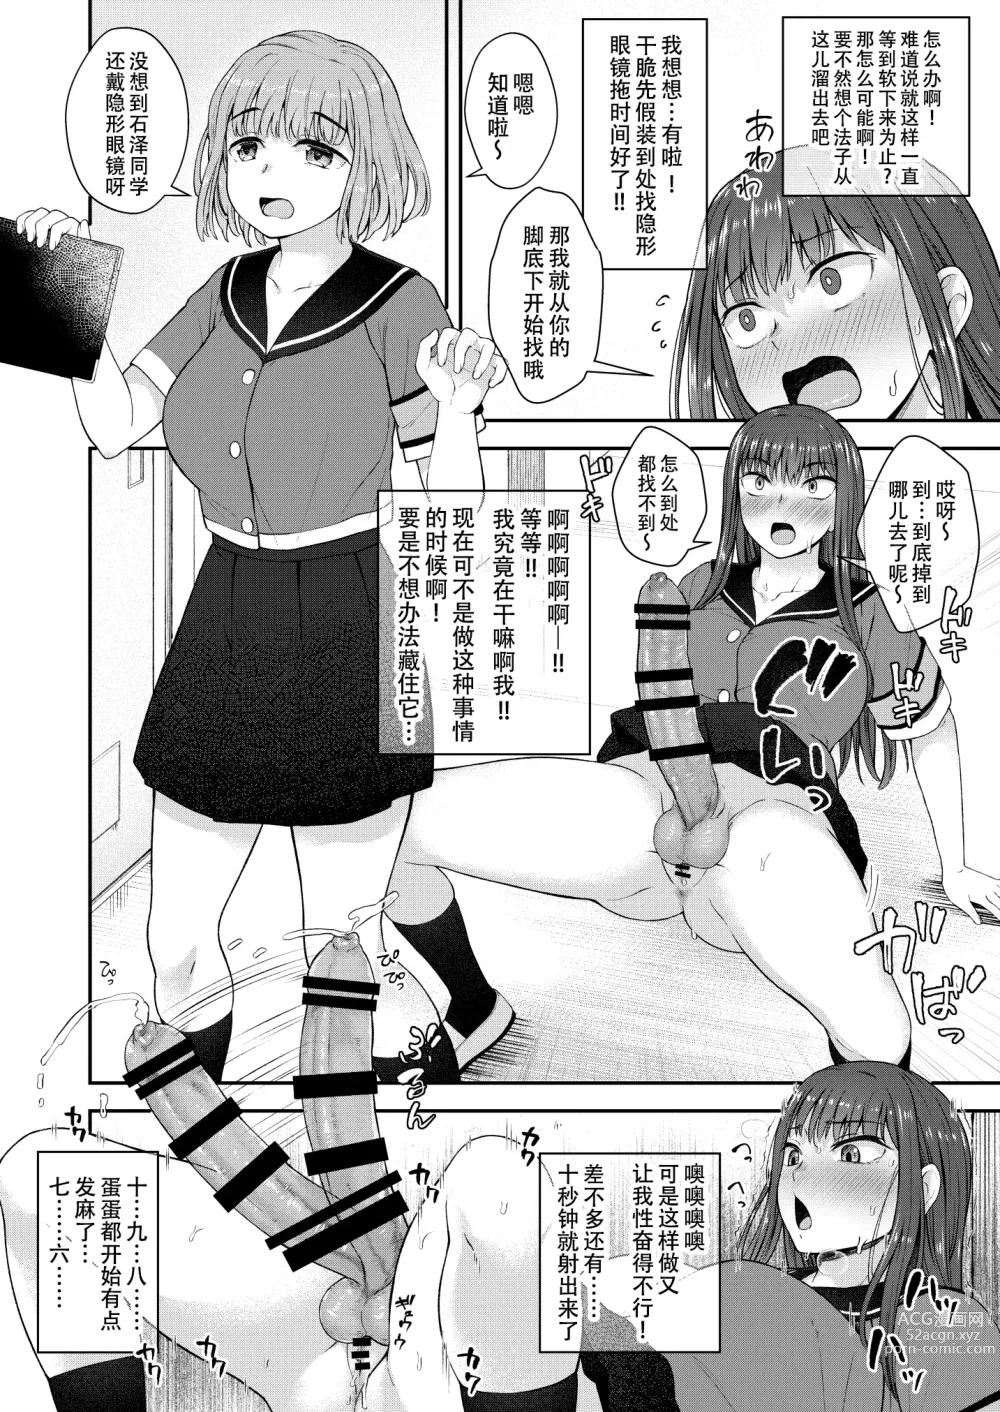 Page 10 of doujinshi 放课后的自拍少女2 那个露出男性性器并且自拍的变态只有她知道其真面目.